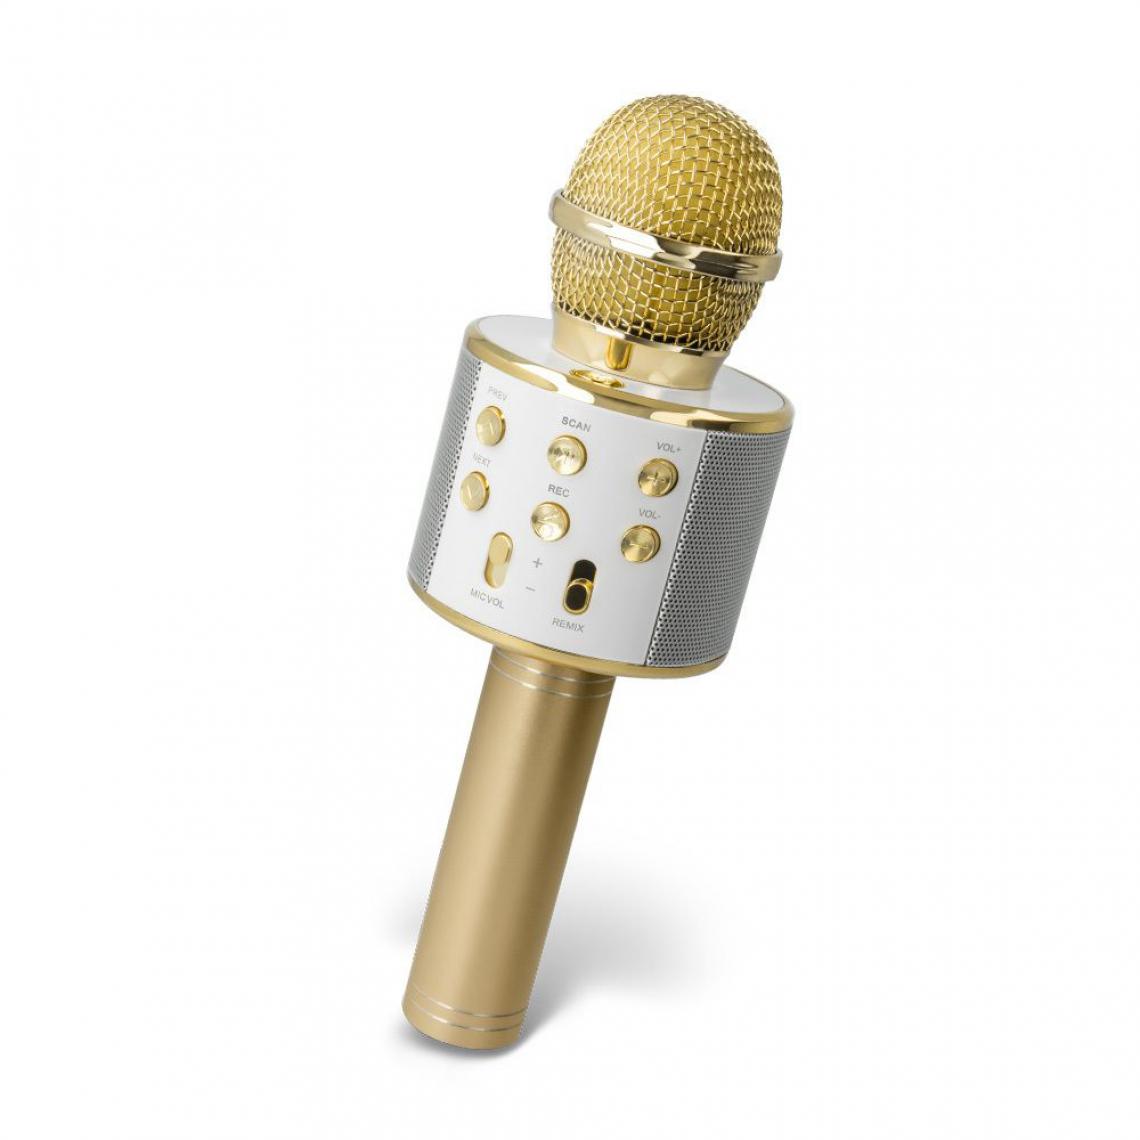 Ozzzo - Microphone Karaoke bluetooth haut parleur ozzzo Gold Or pour Gigaset GX290 - Autres accessoires smartphone